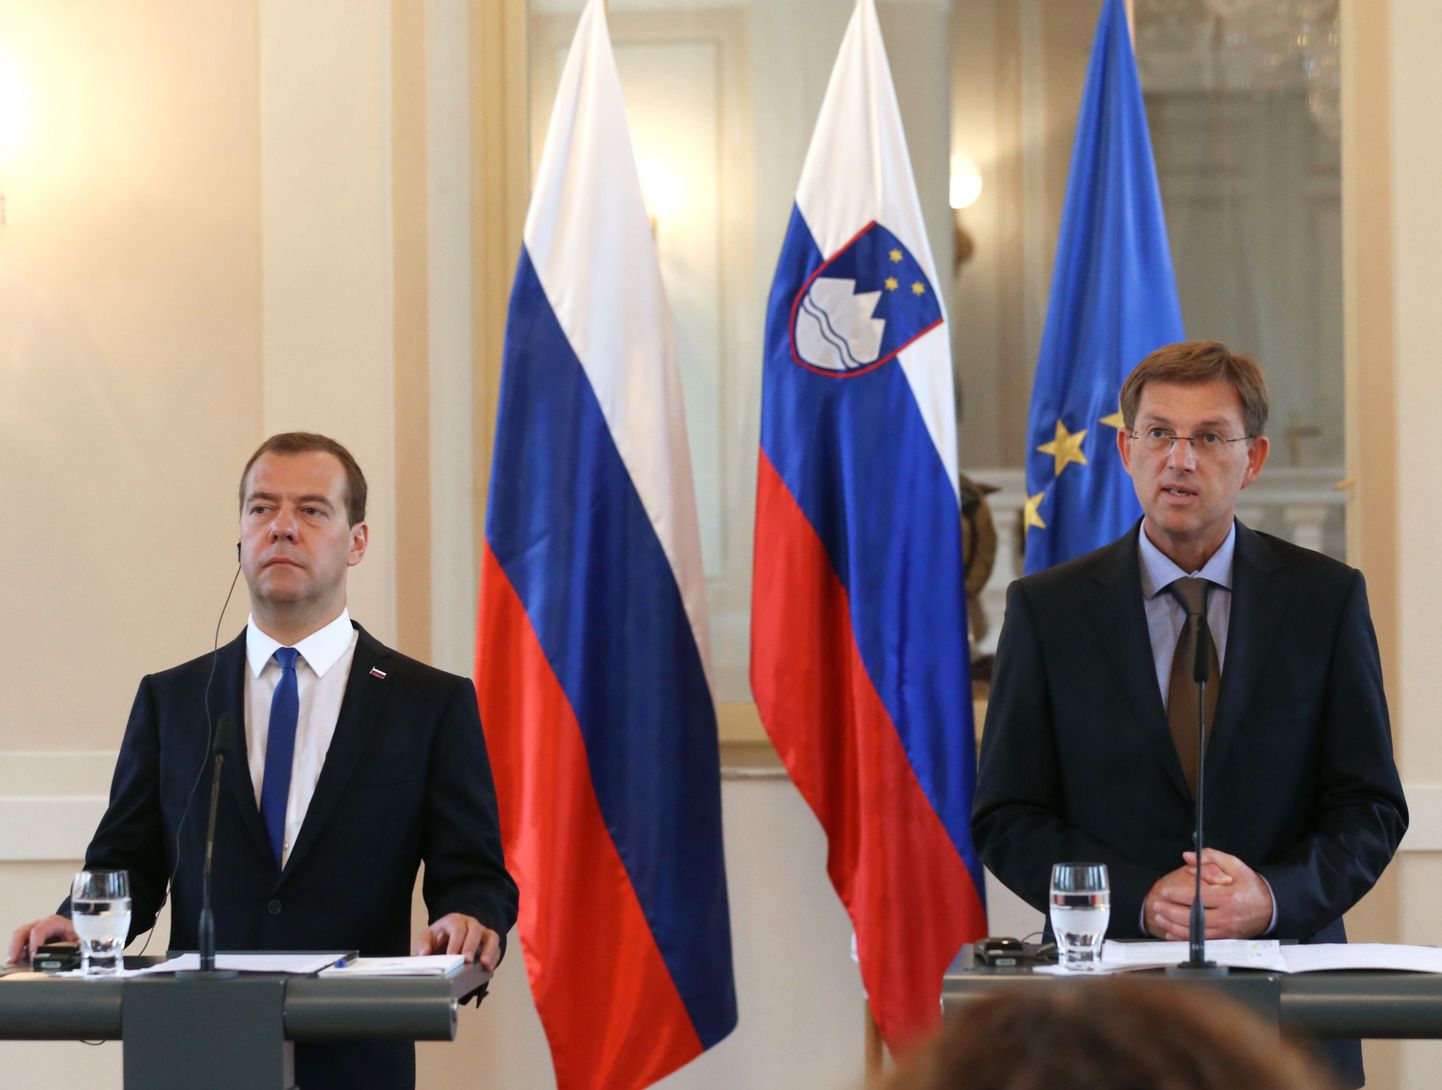 Venemaa peaminister Dmitri Medvedev ja Sloveenia valitsusjuht Miroslav Cerar.